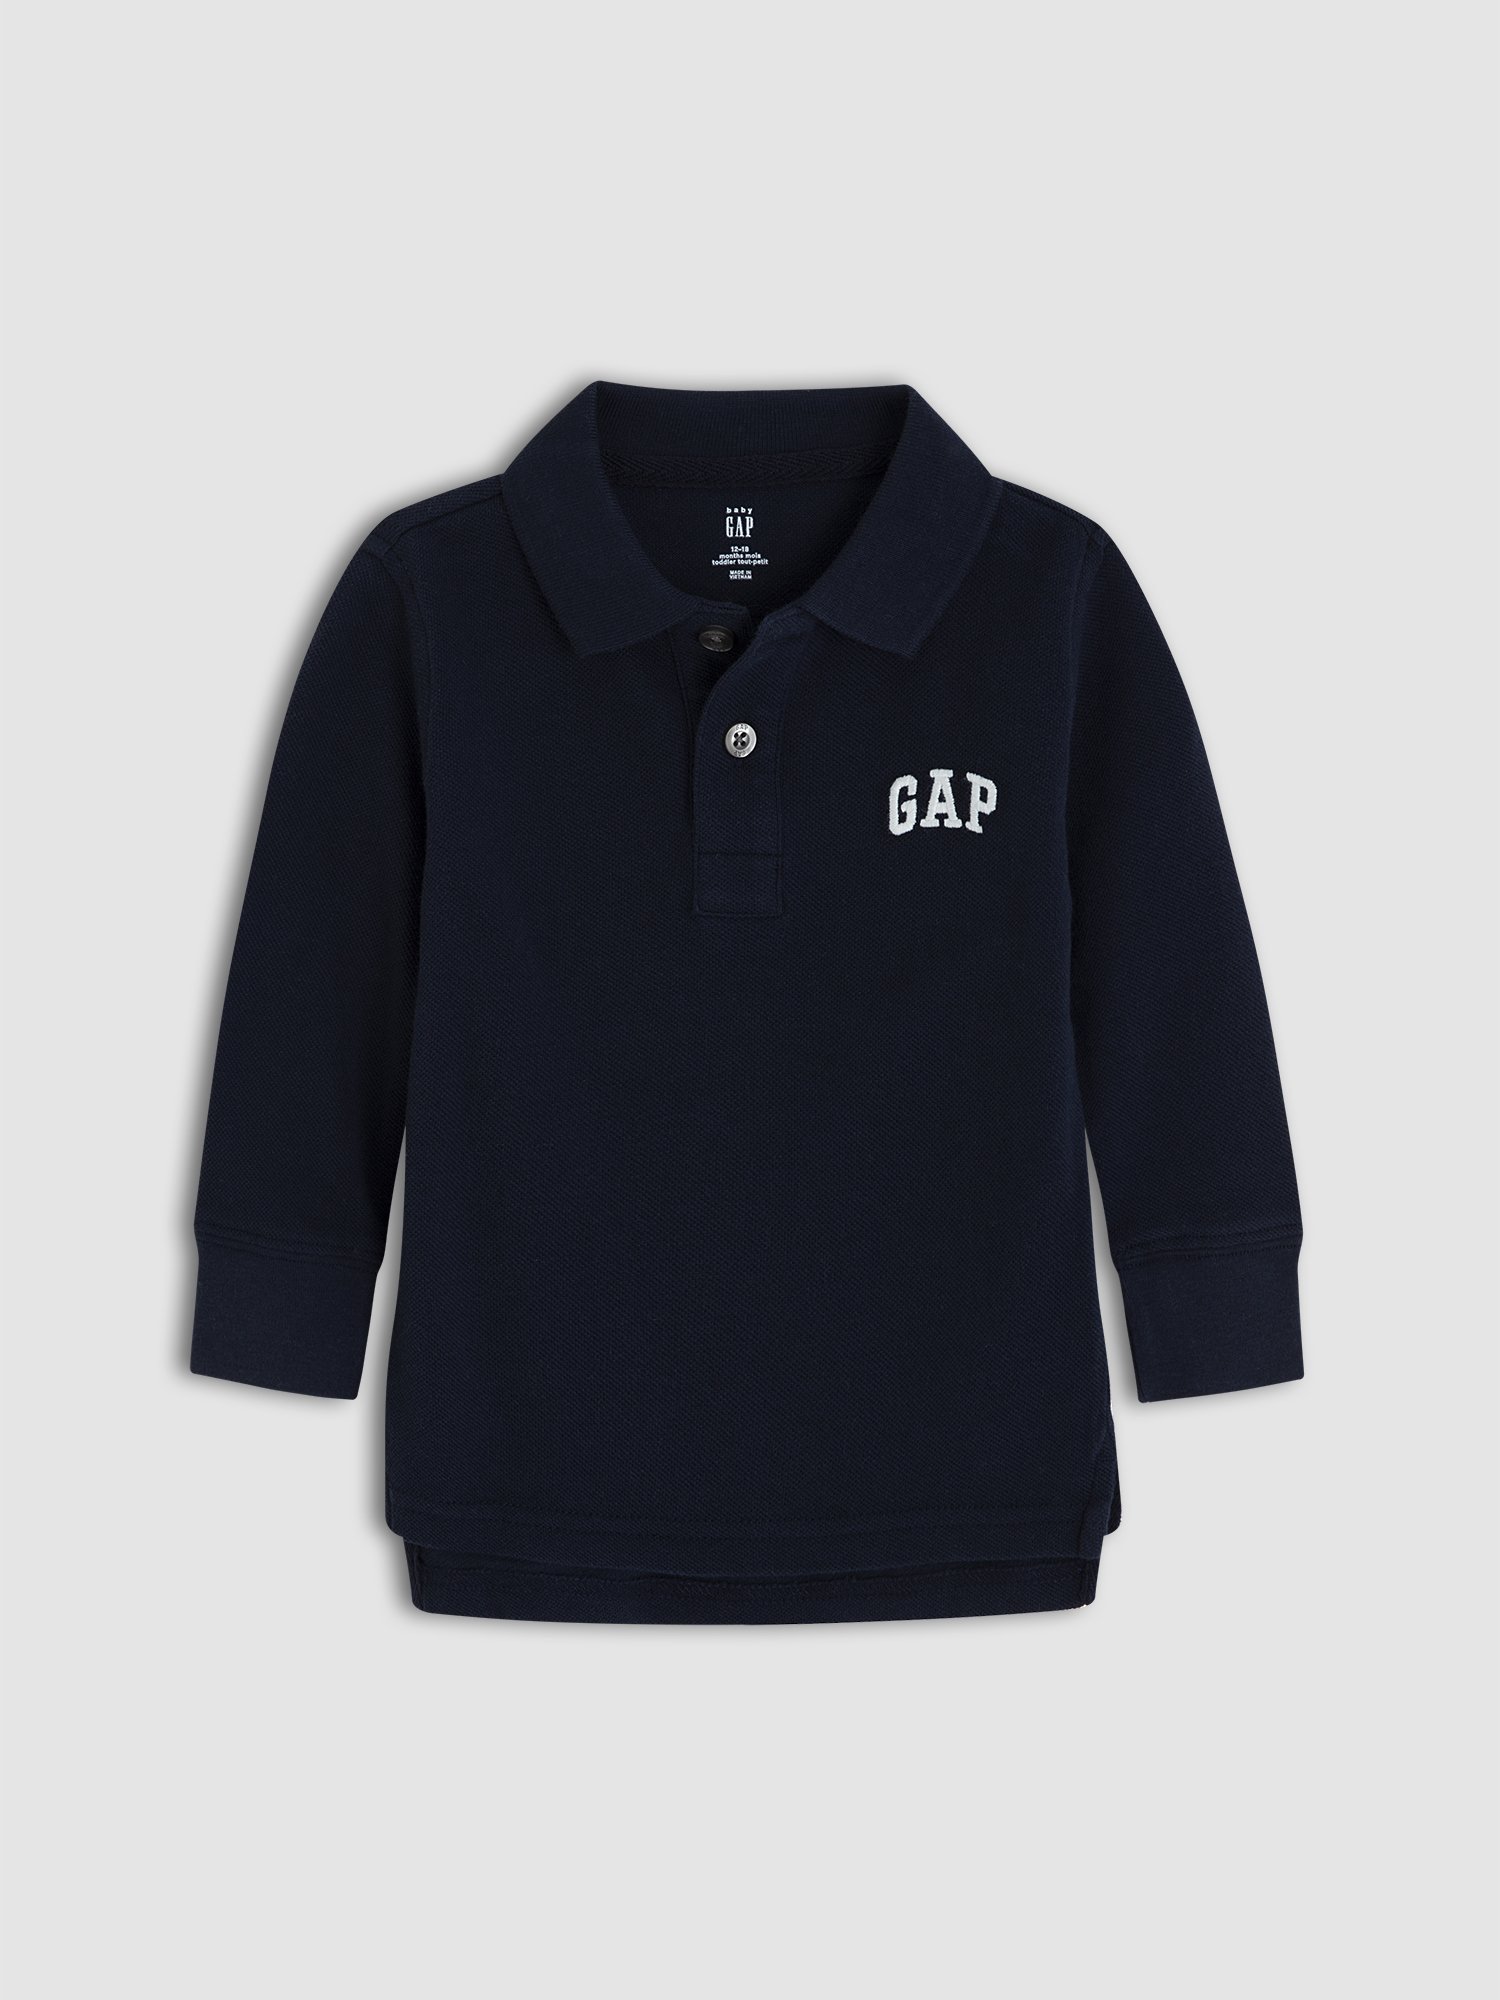 Gap Logo Polo T-Shirt product image